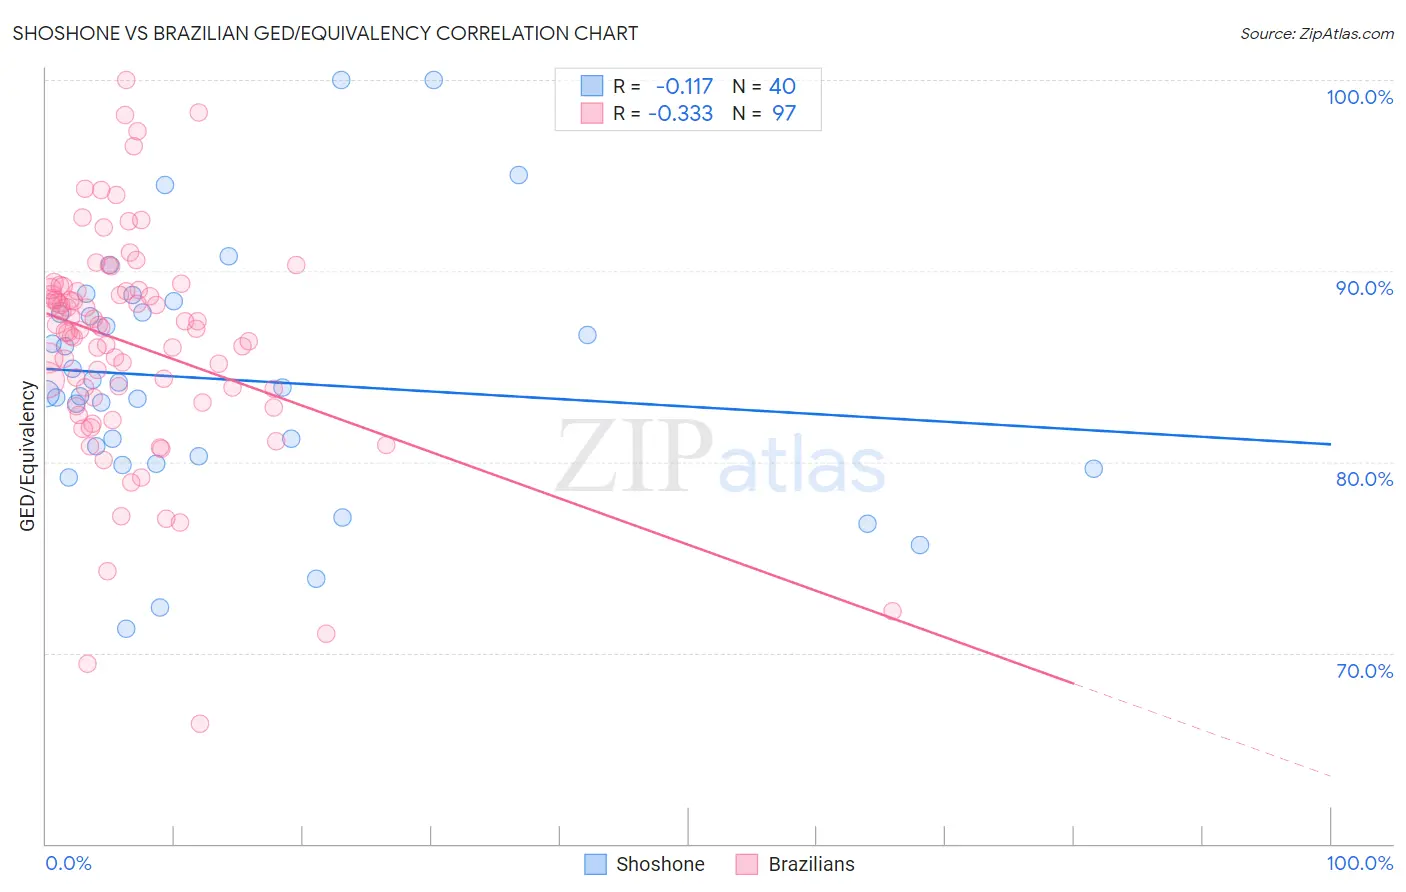 Shoshone vs Brazilian GED/Equivalency